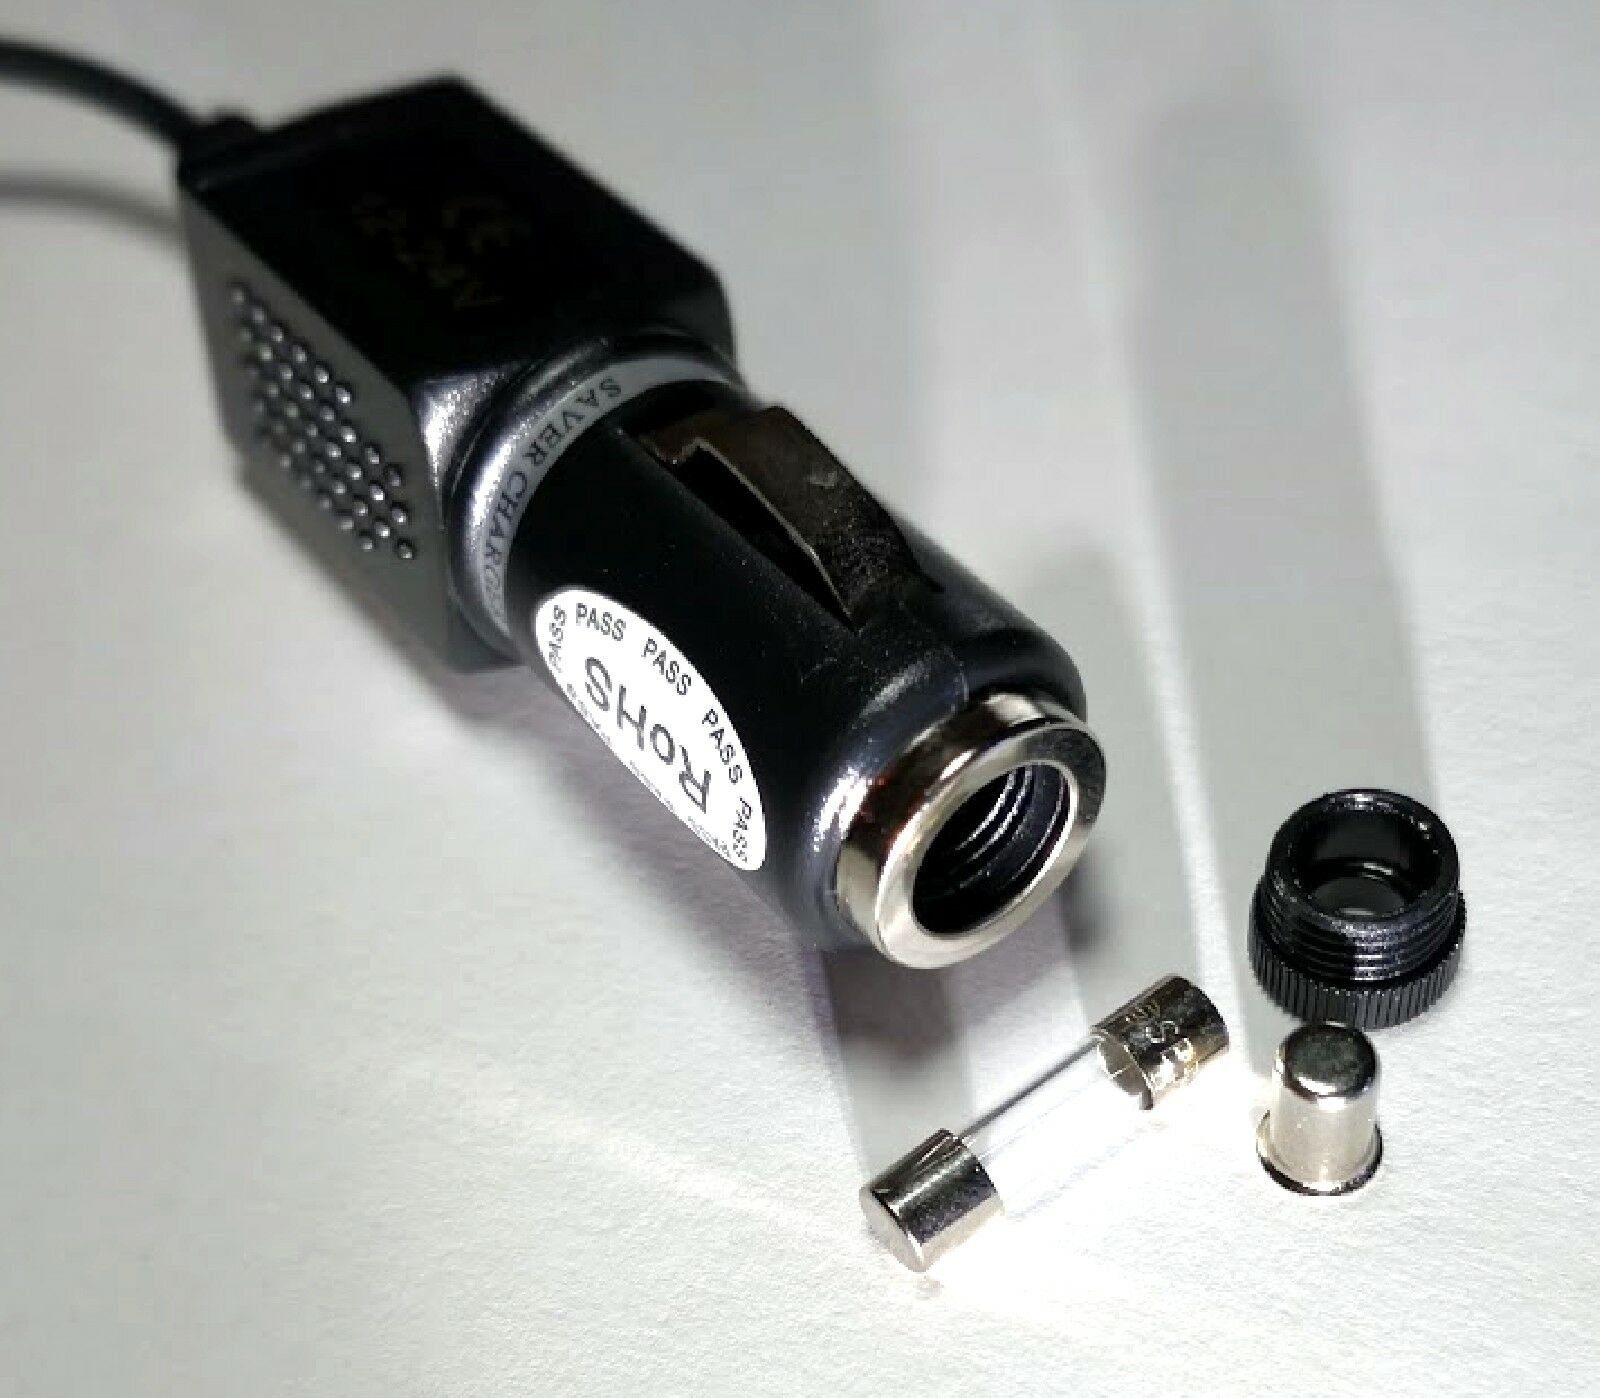 AIV KFZ 12V 24V Ladekabel Micro-USB Spiral-Kabel Smartphone-Kabel,  micro-USB, Lade-Adapter für PKW Auto LKW Wohnmobil NFZ, für Handy, Navi,  etc.